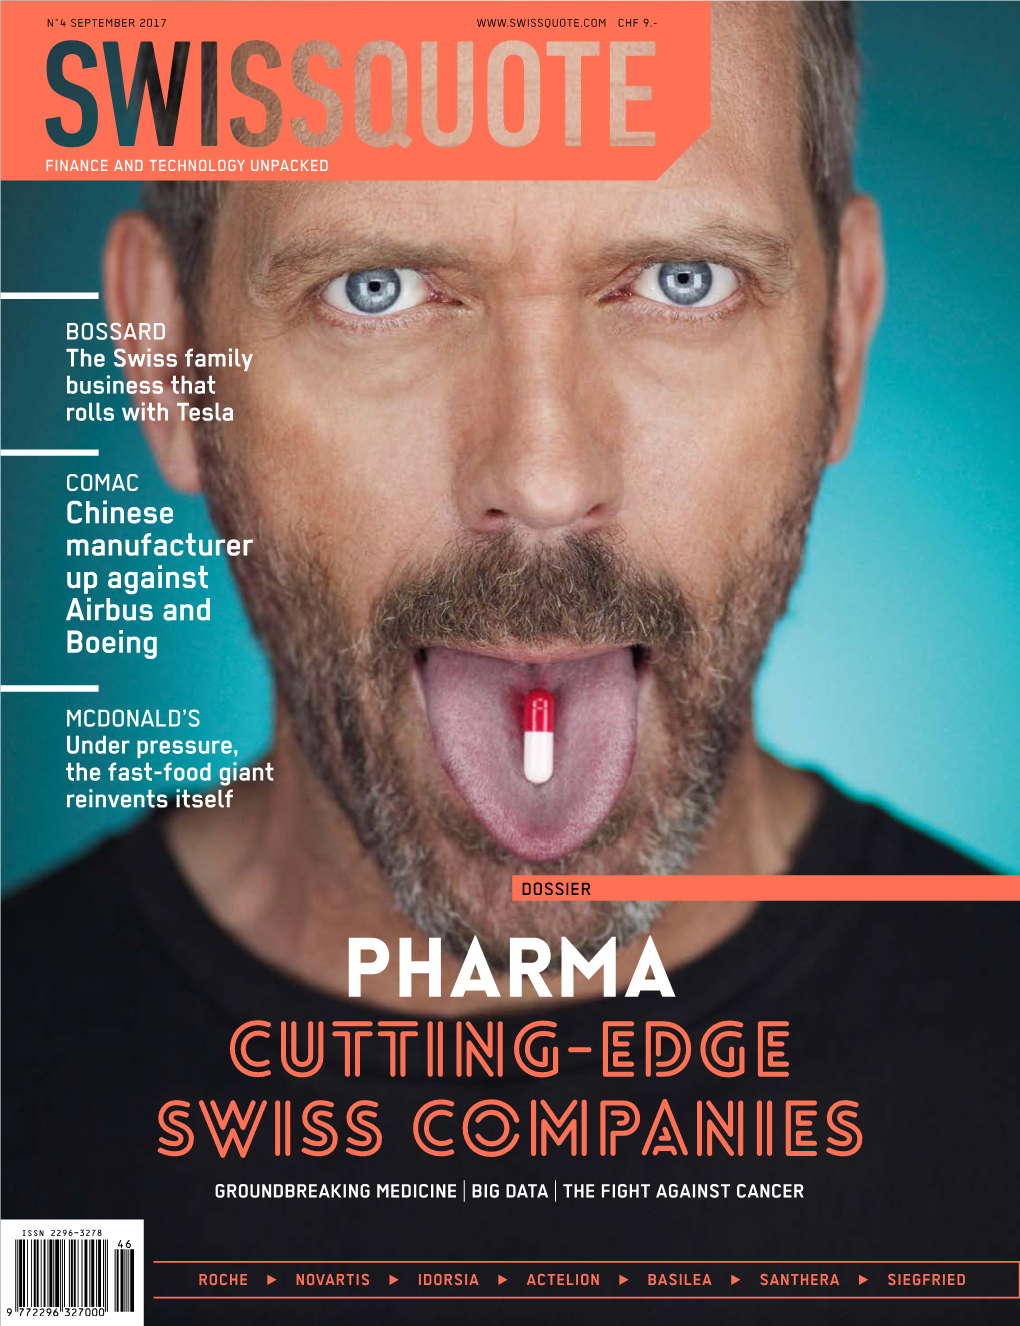 Pharma Cutting-Edge Swiss Companies Groundbreaking Medicine | Big Data | the Fight Against Cancer